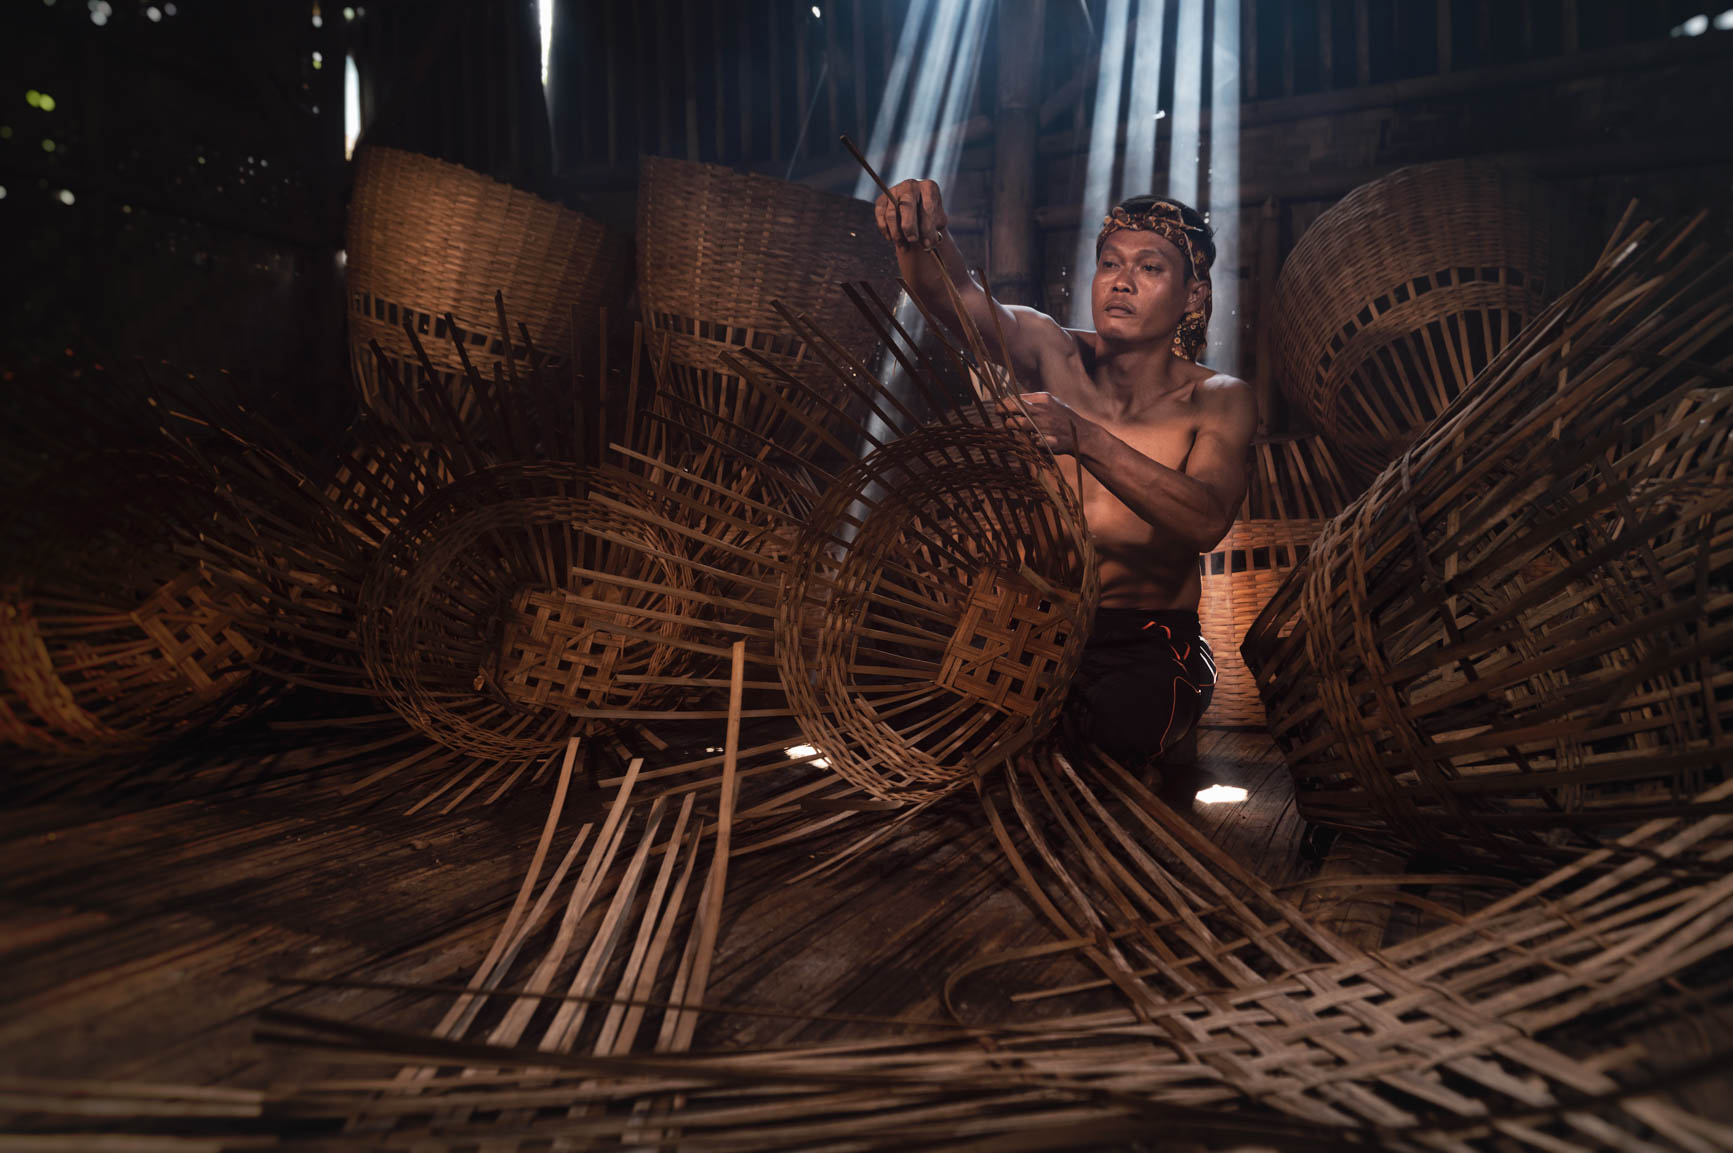 .: Basket weaving :....